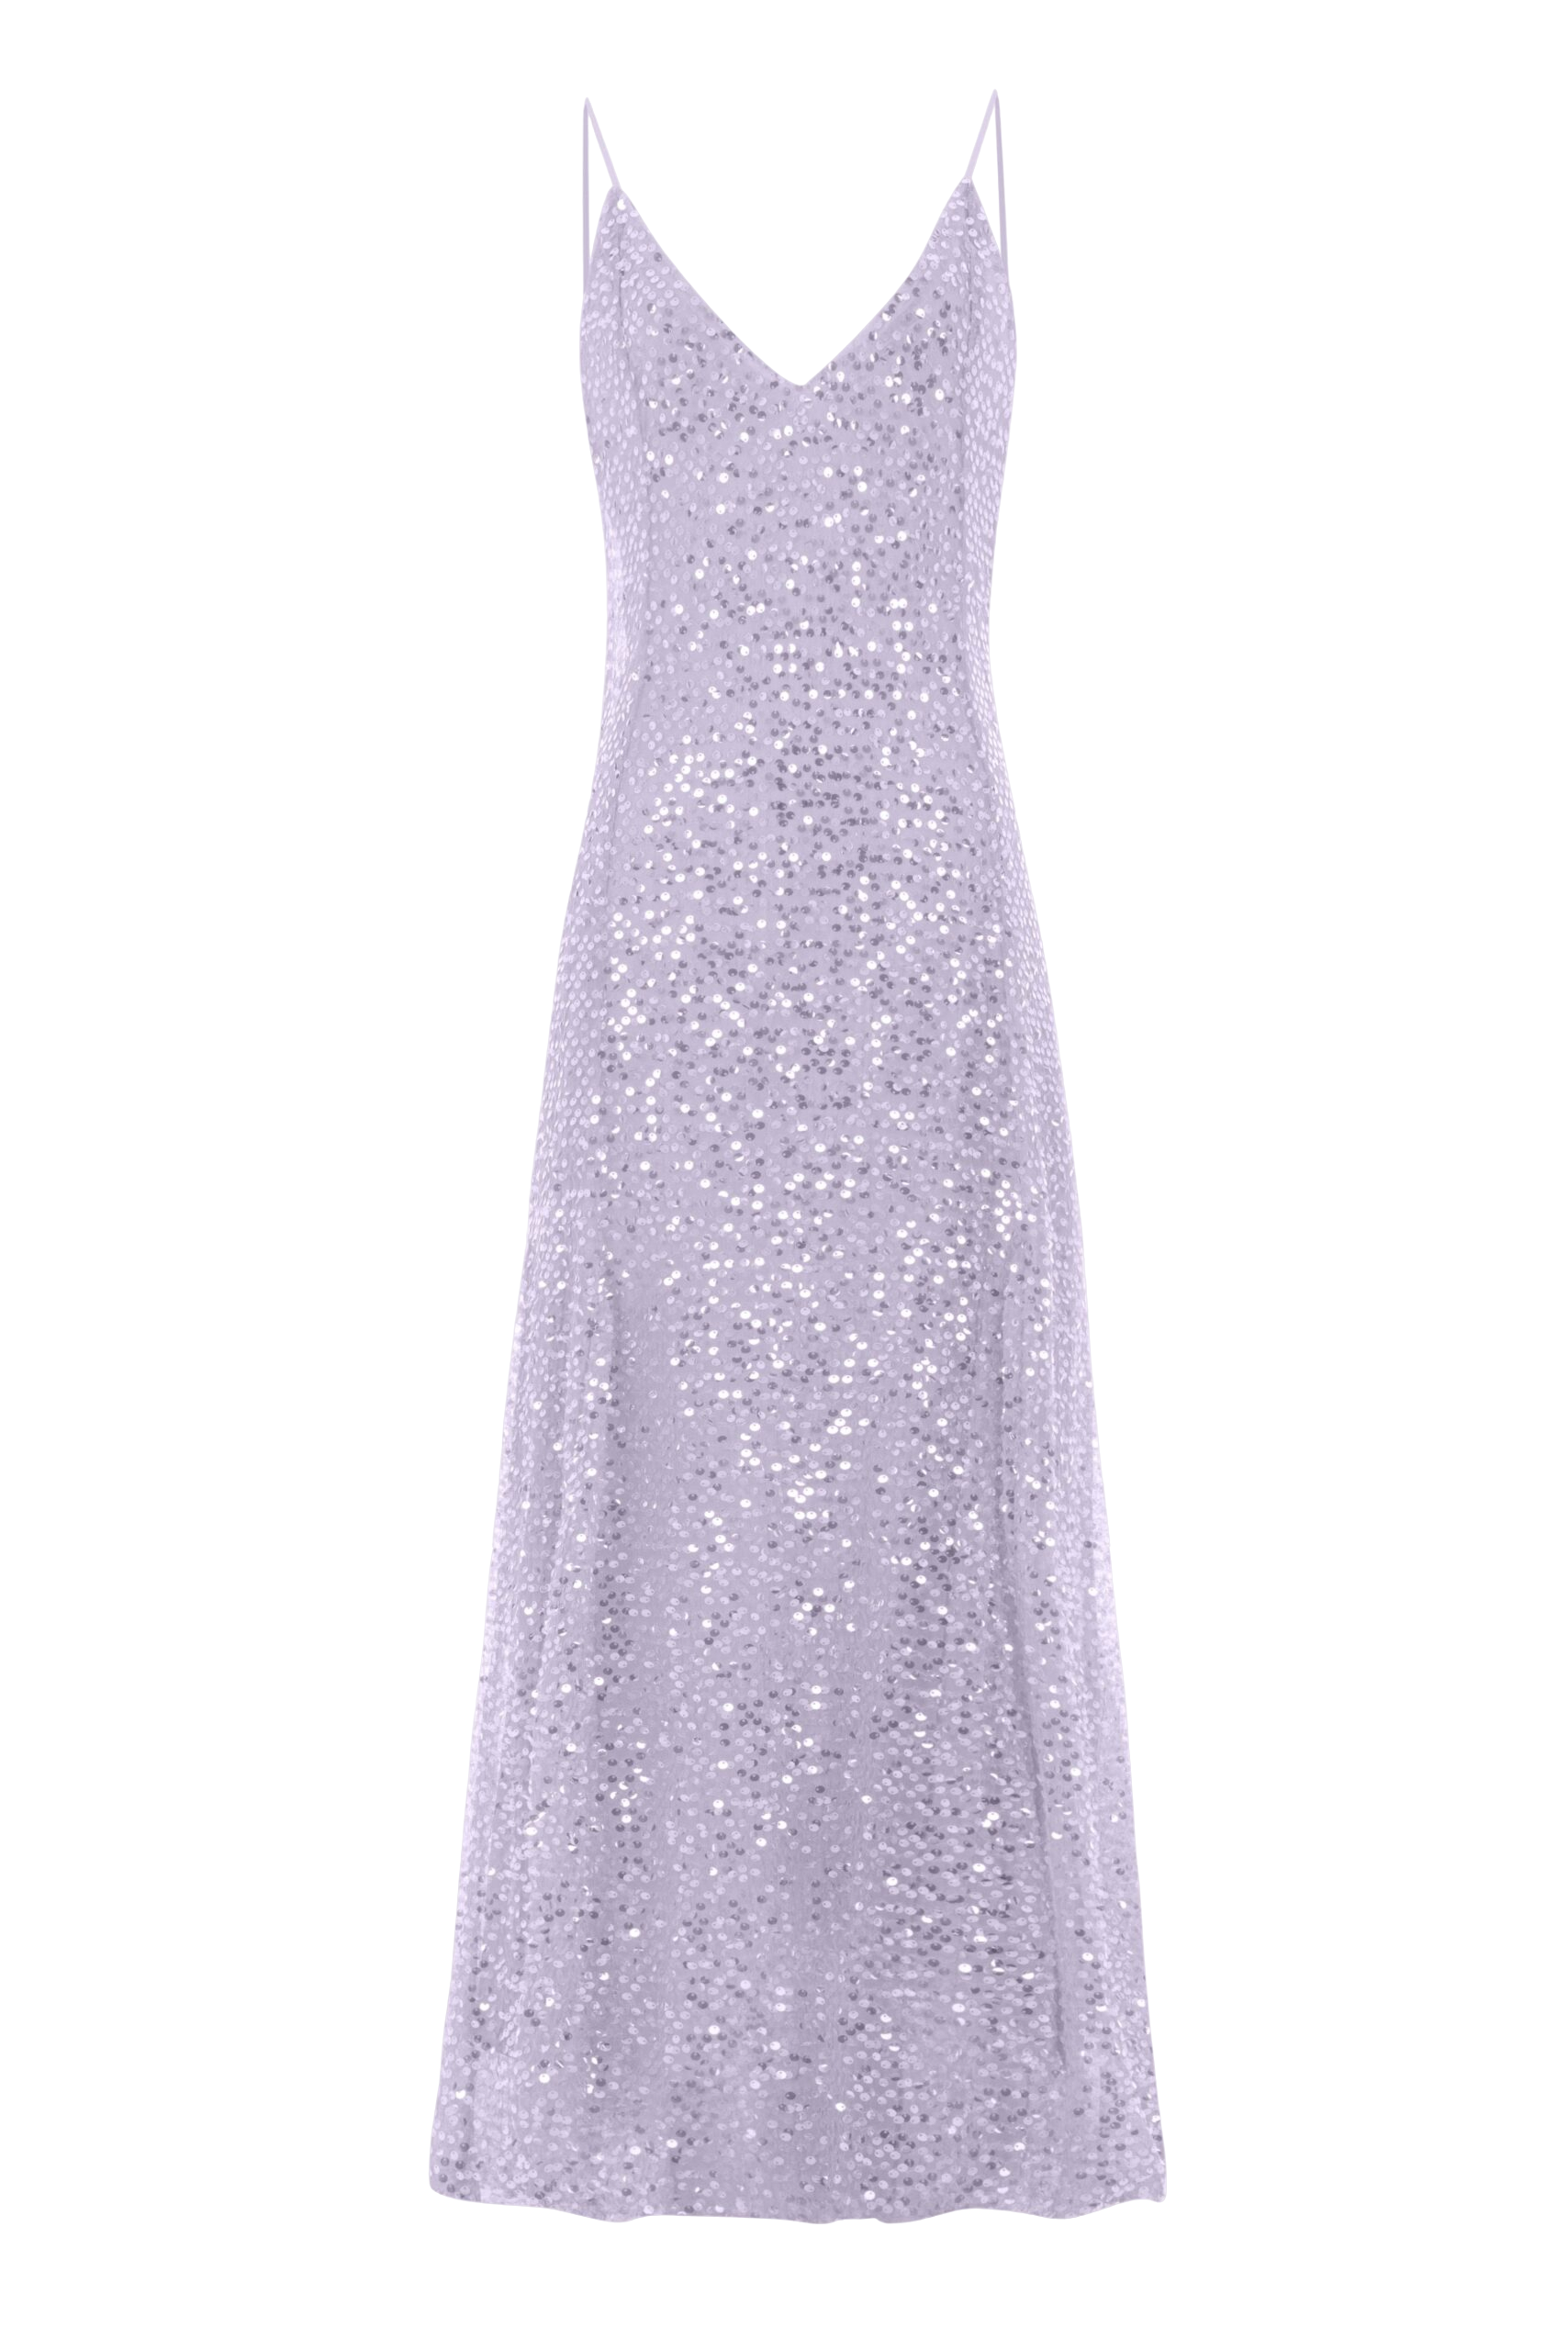 Shop F.ilkk Lilac Sequined Dress